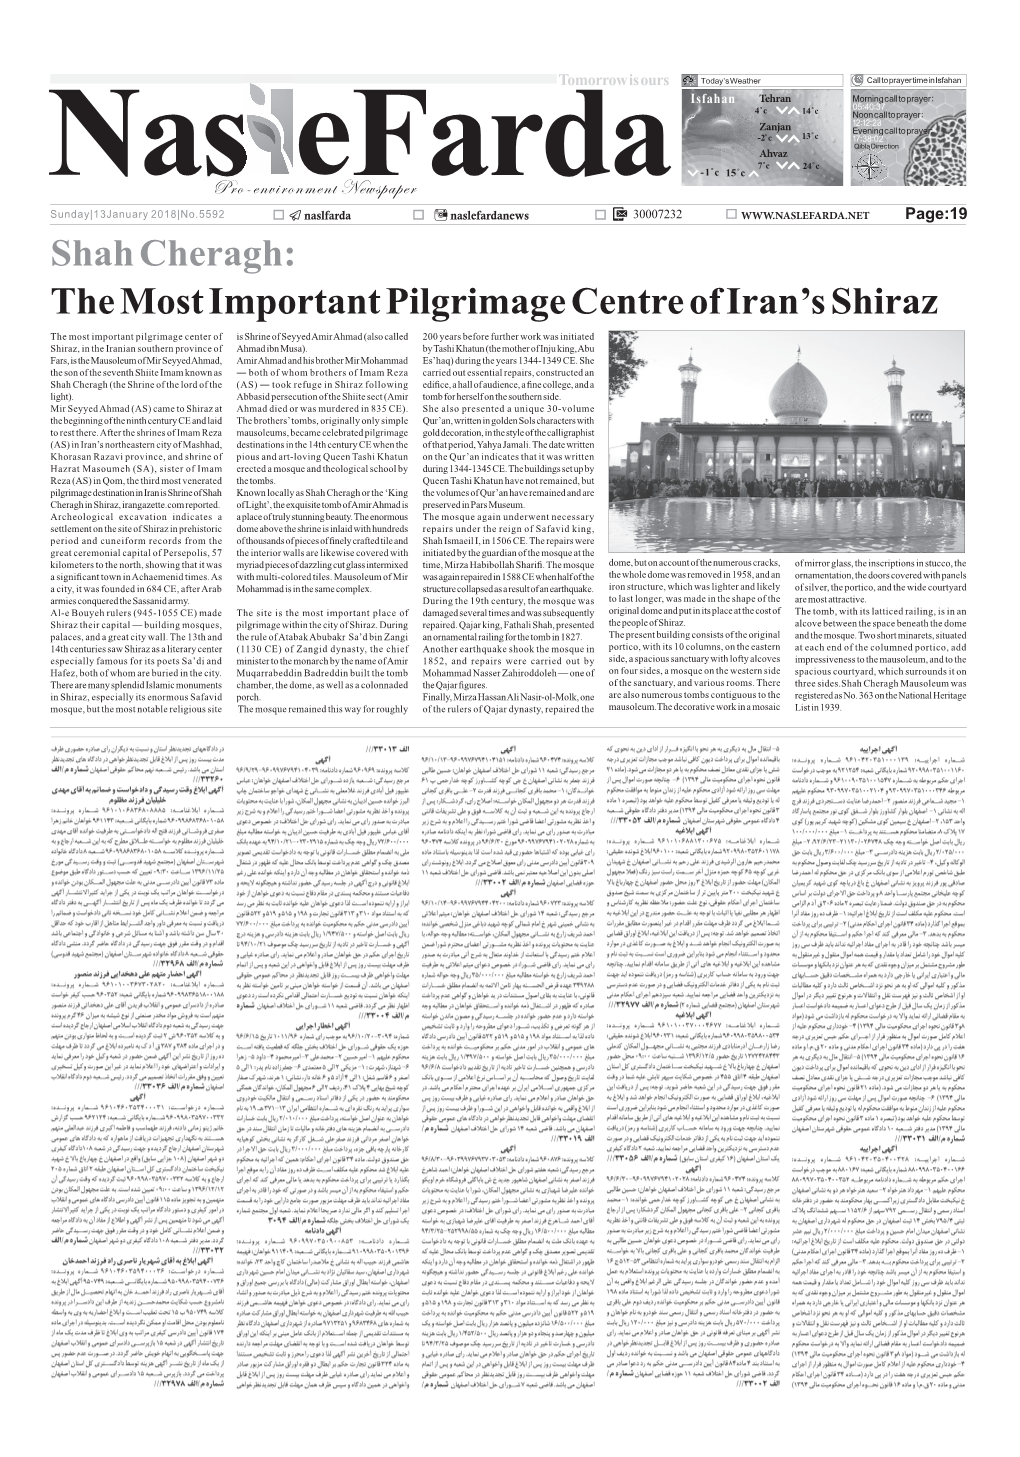 Shah Cheragh: the Most Important Pilgrimage Centre of Iran's Shiraz